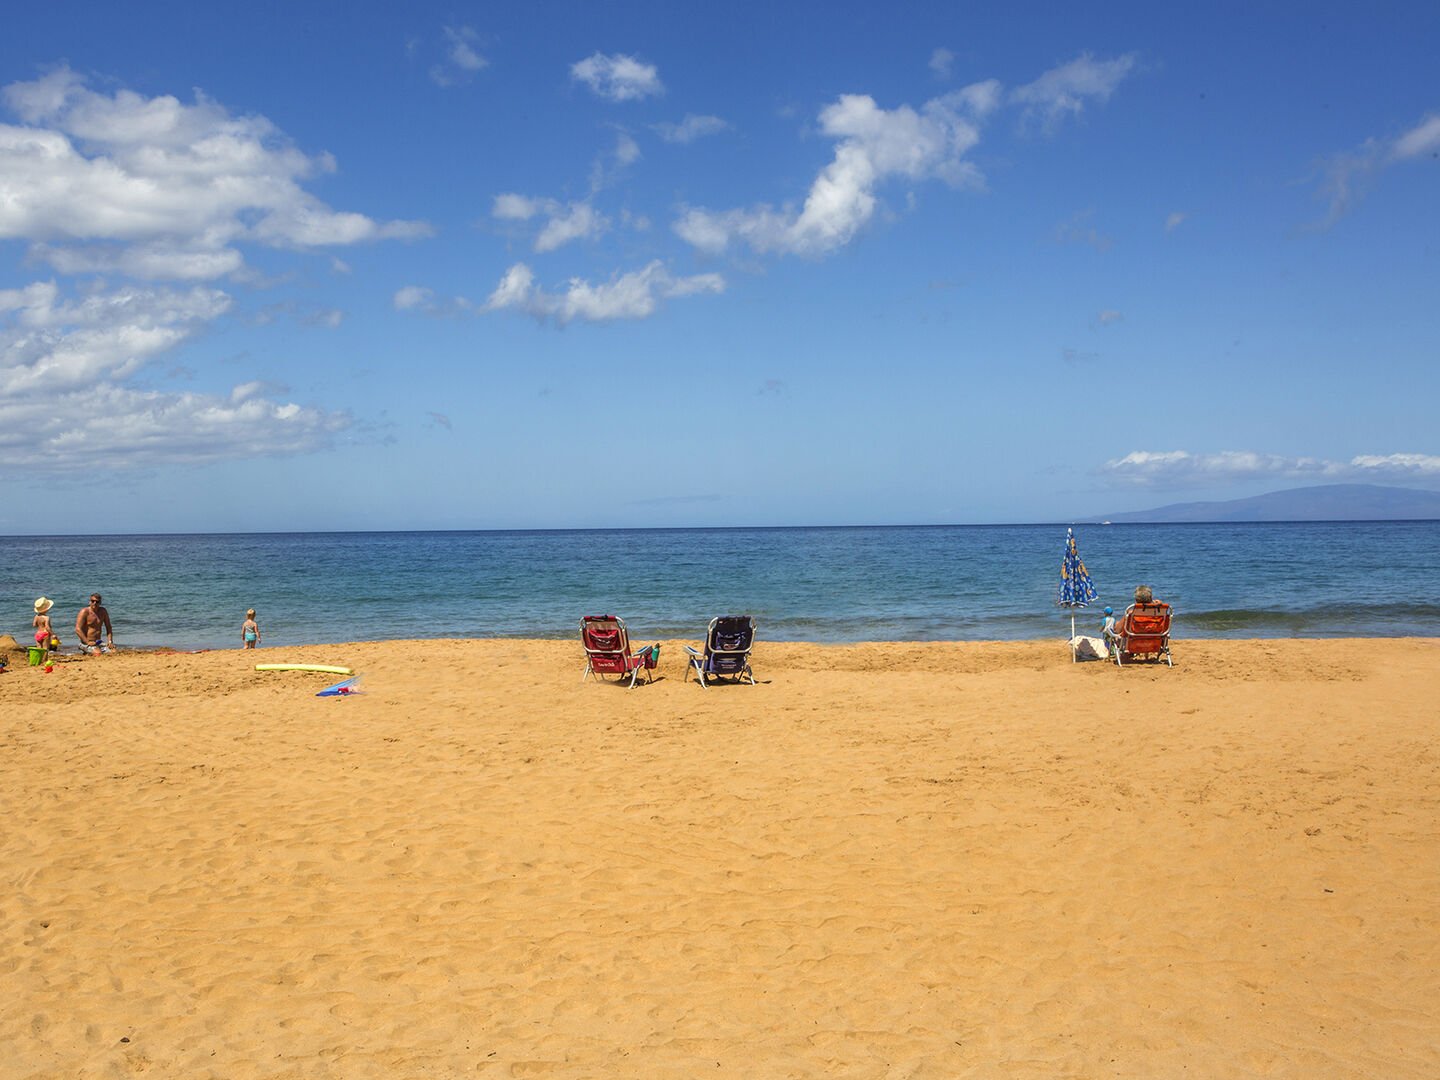 Enjoy Maui beaches